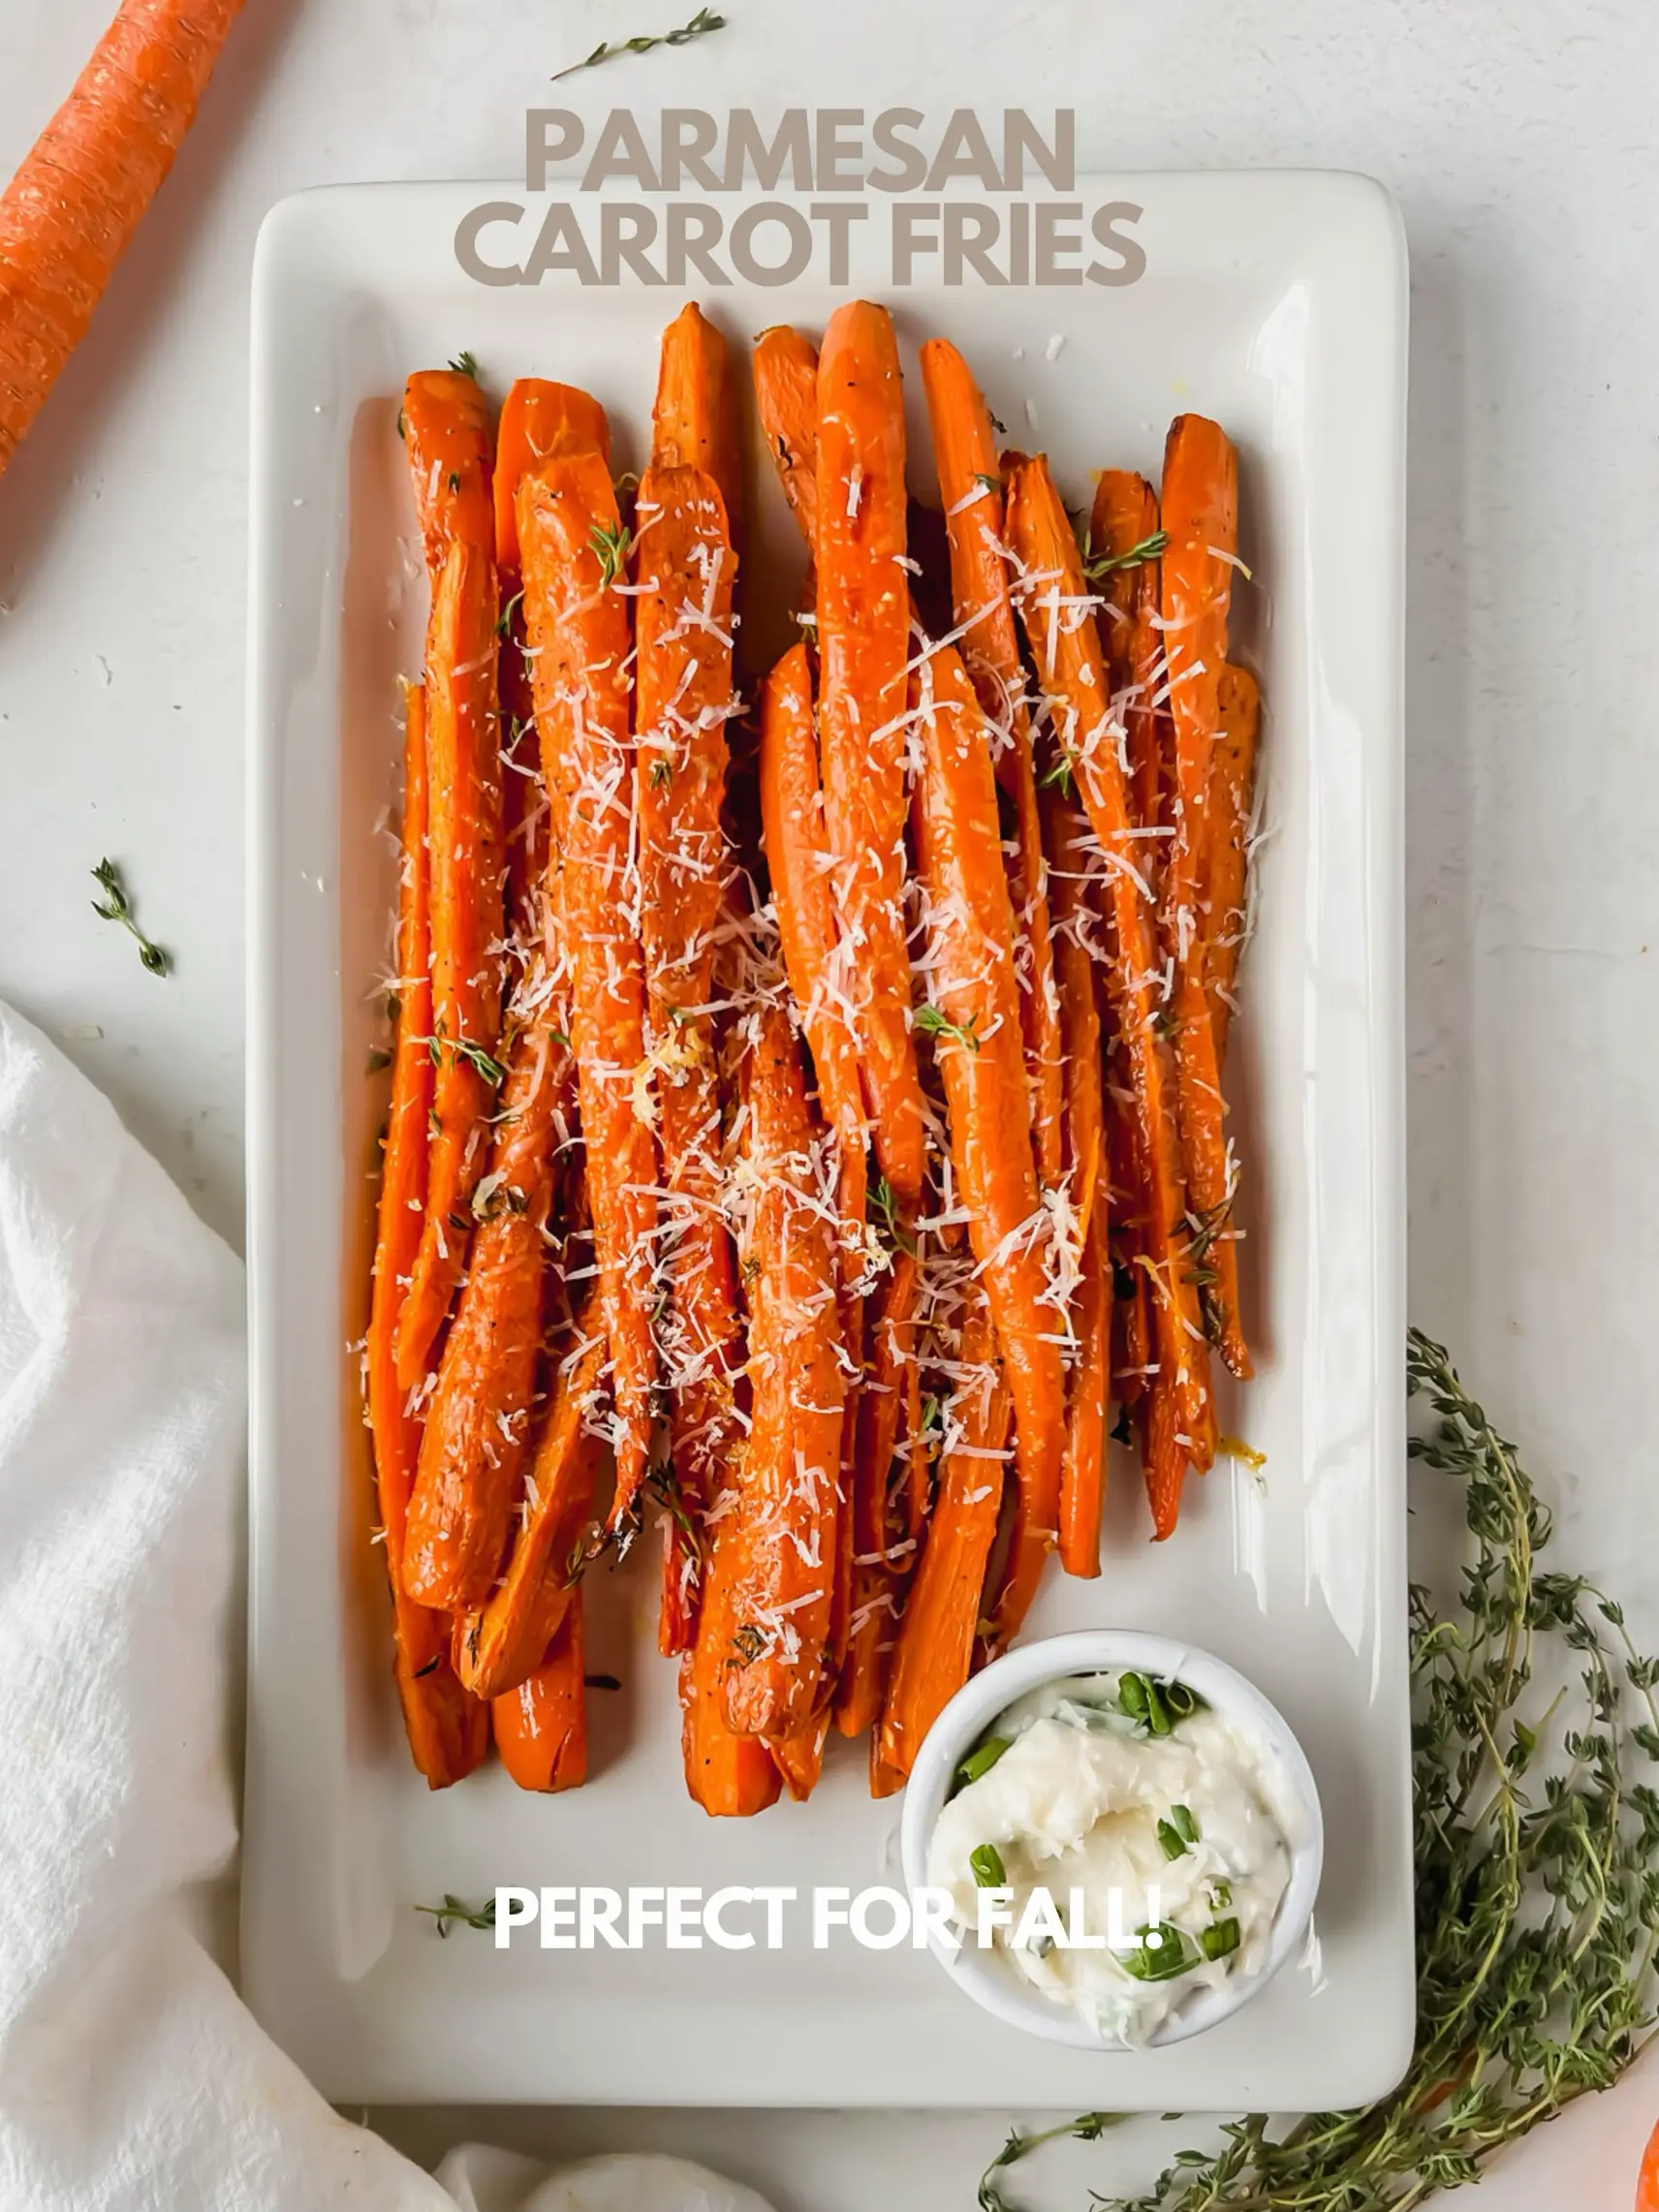 Carrotsticks and Cravings - Lemon8 Search